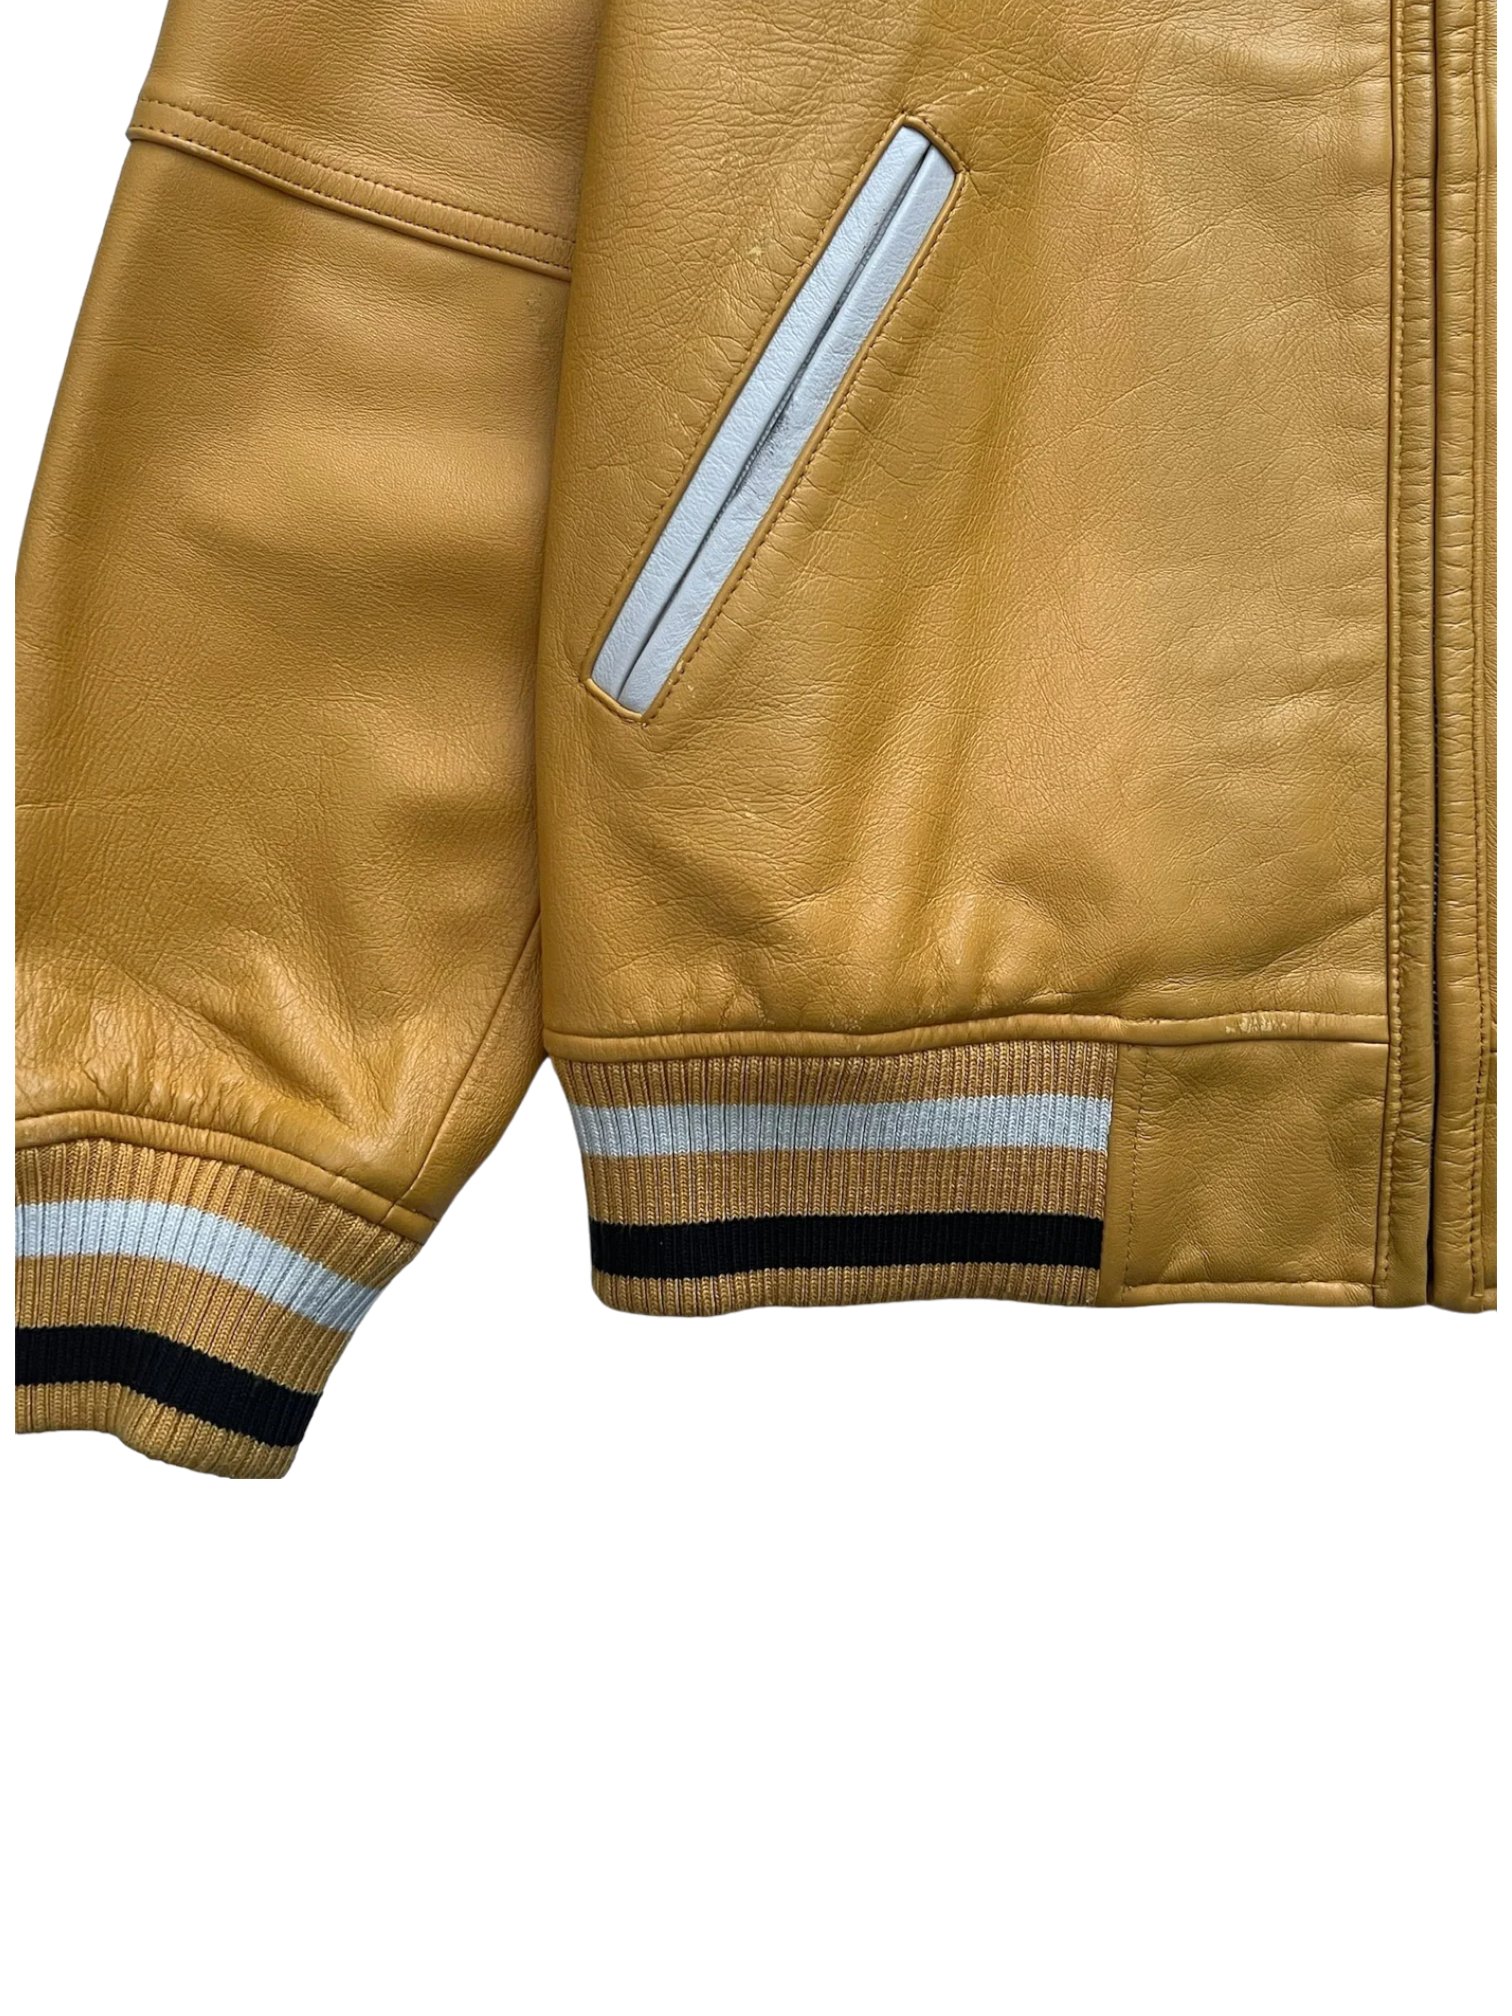 2016 Supreme Yellow Uptown Studded Leather Varsity Jacket